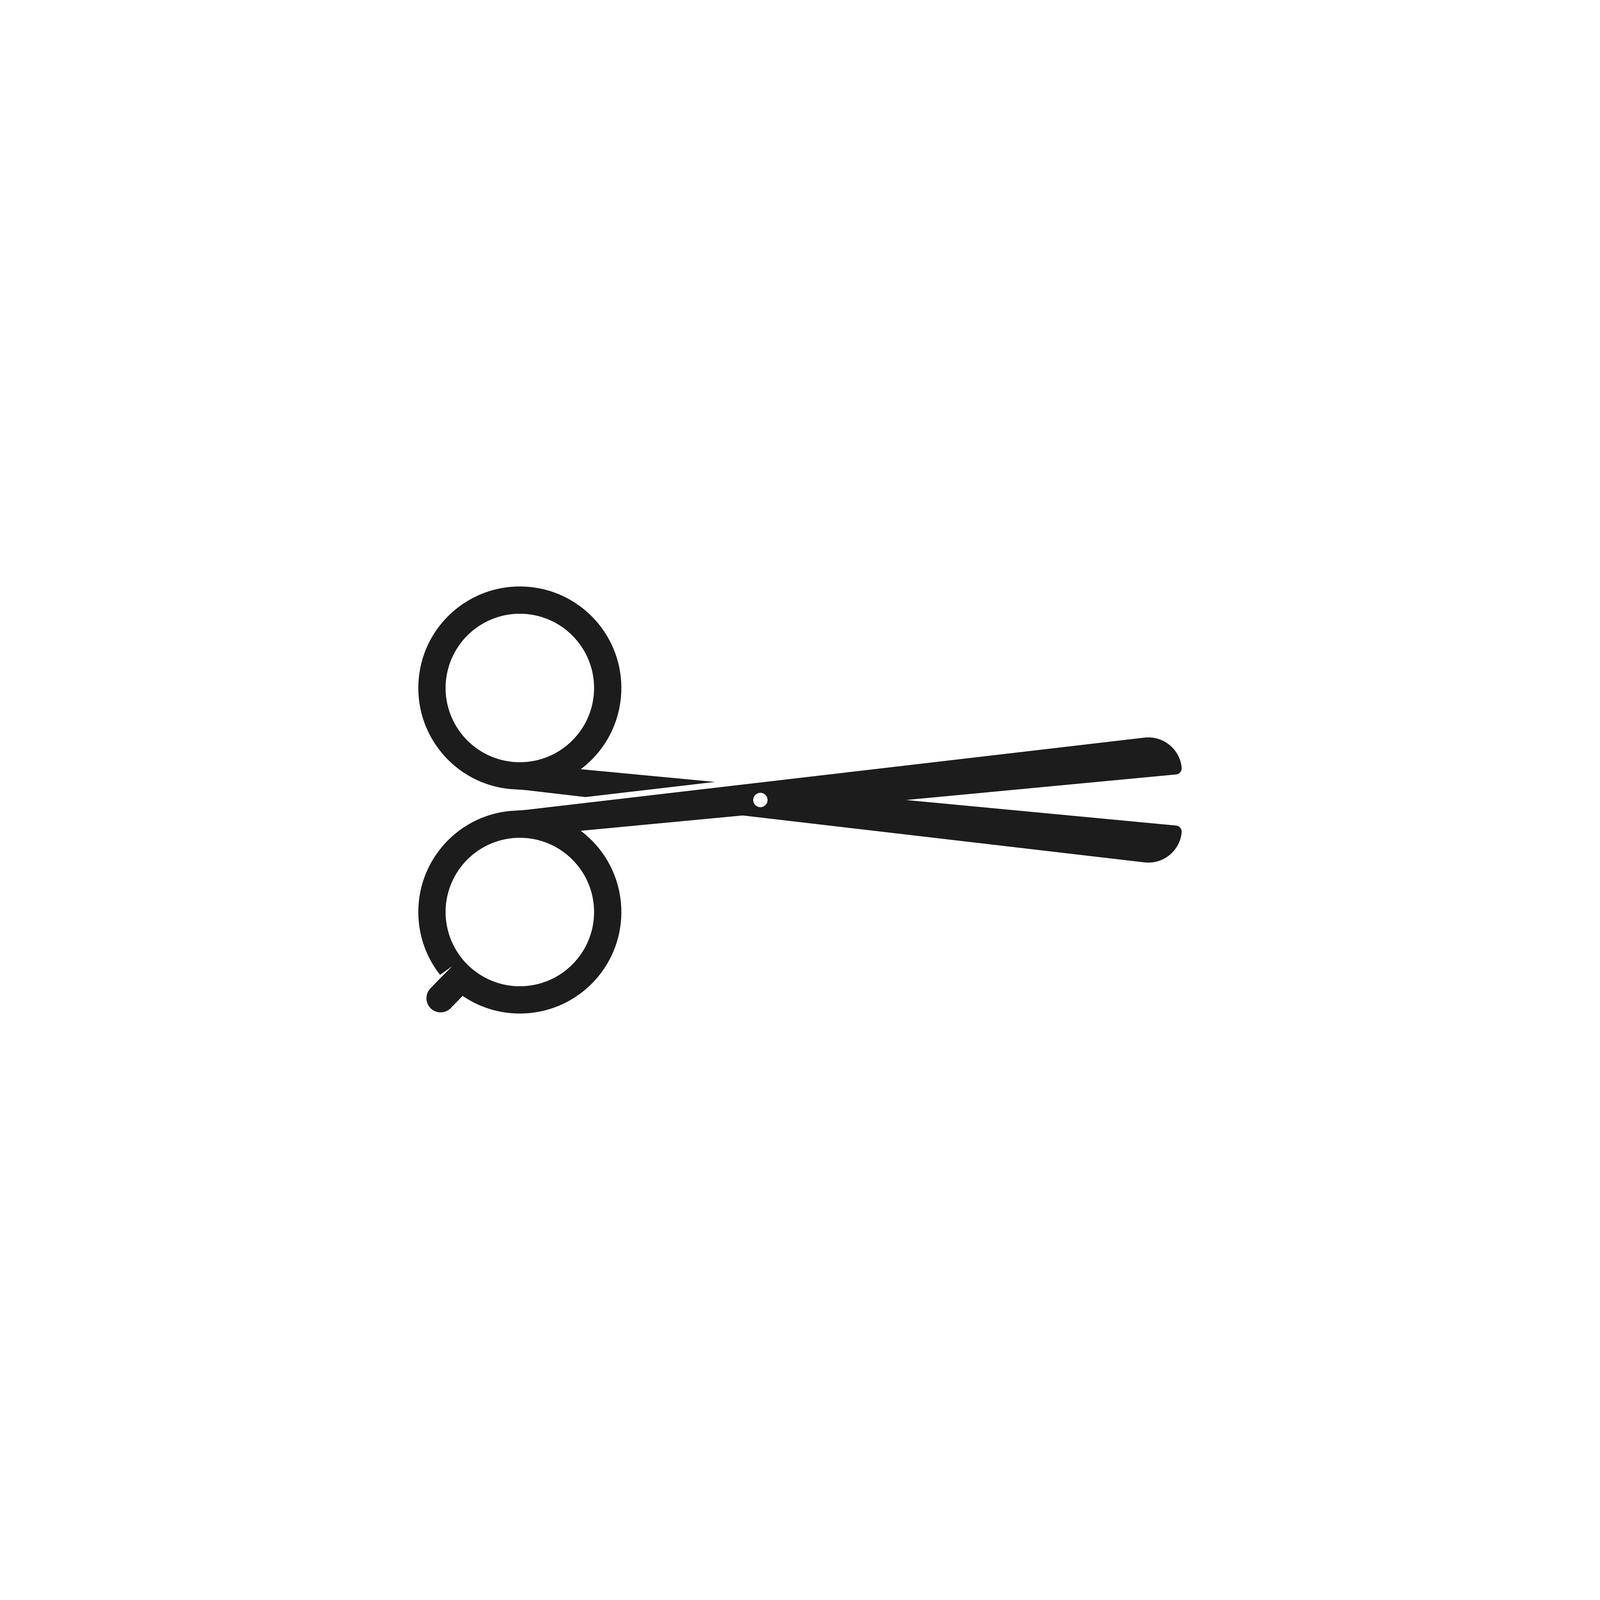 Scissors icon vector illustration. by Amin89